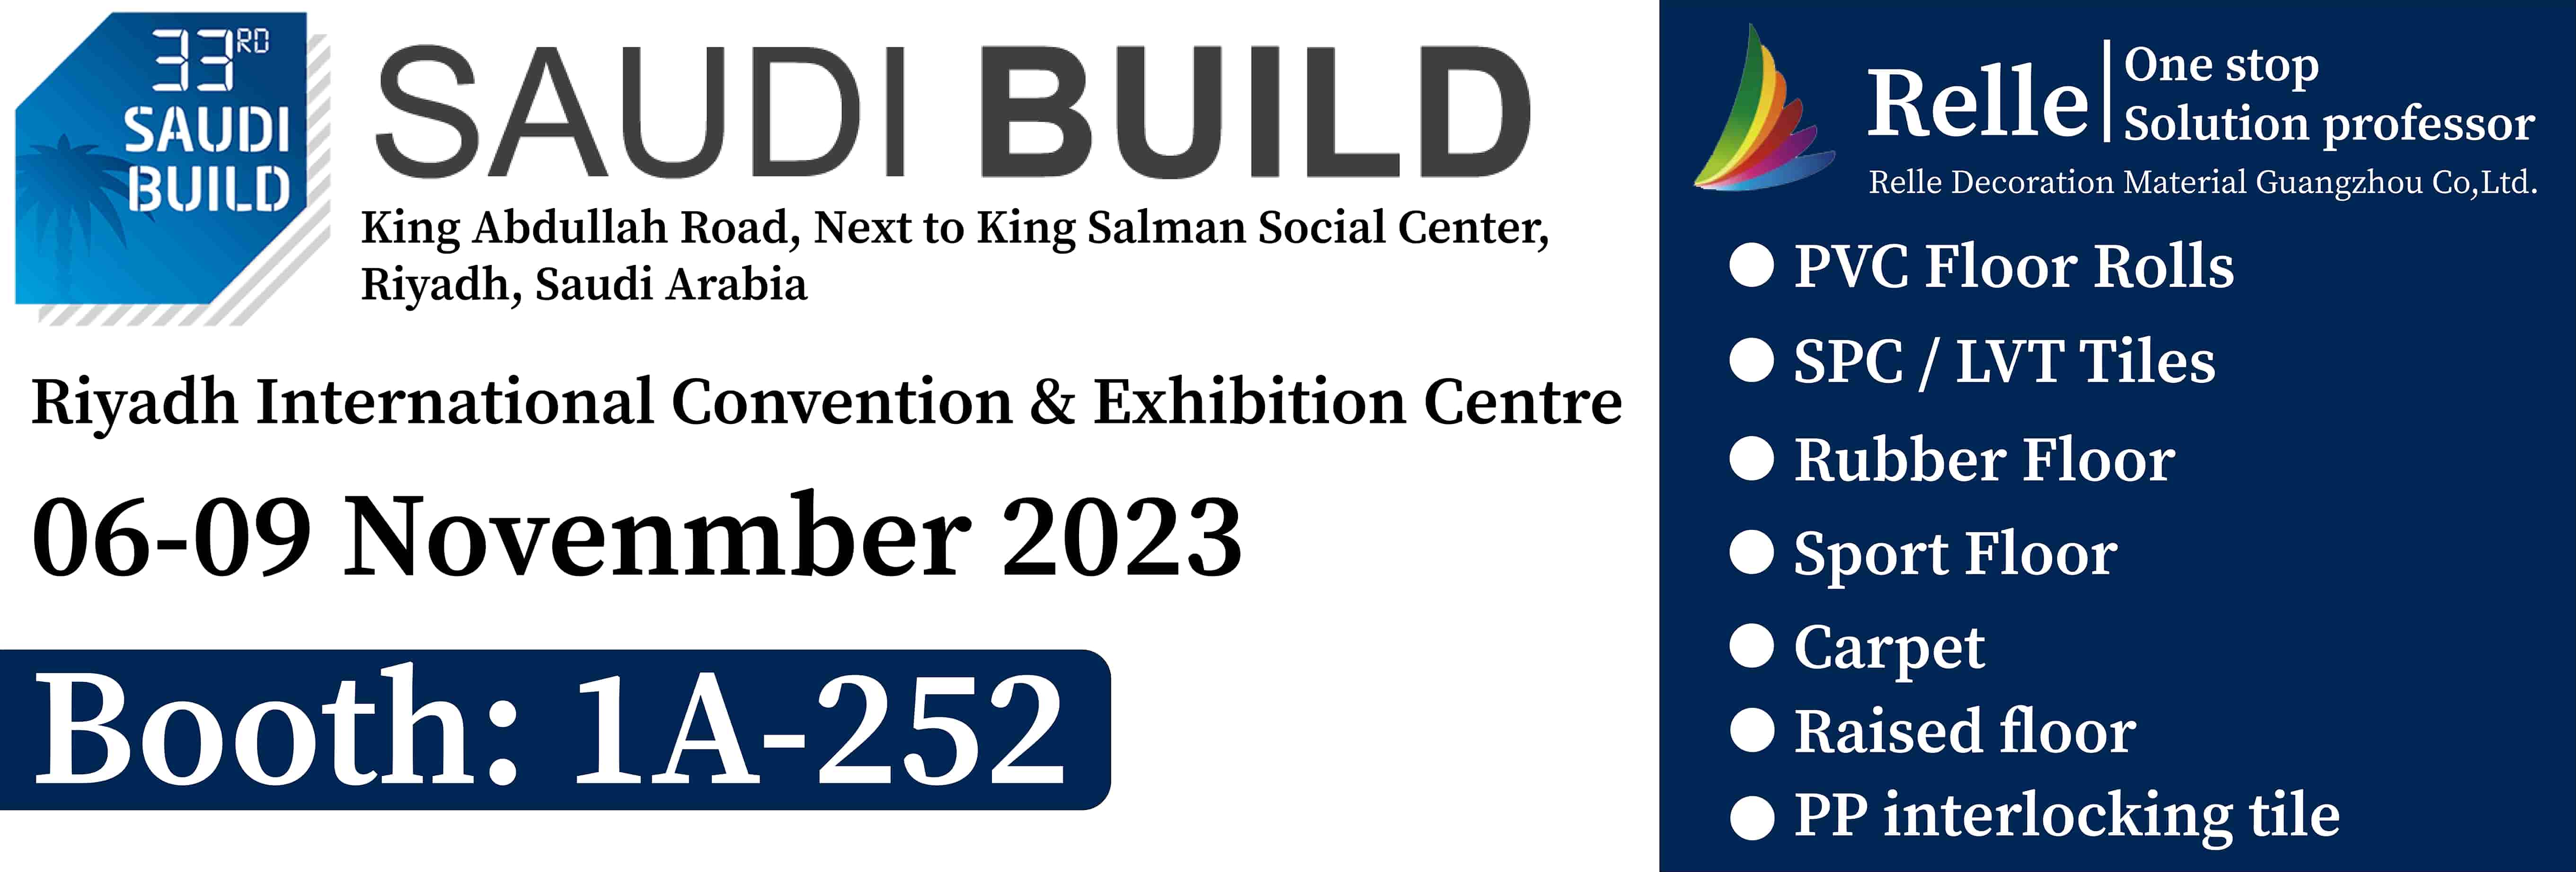  Welcome to 2023 SAUDI BUILD